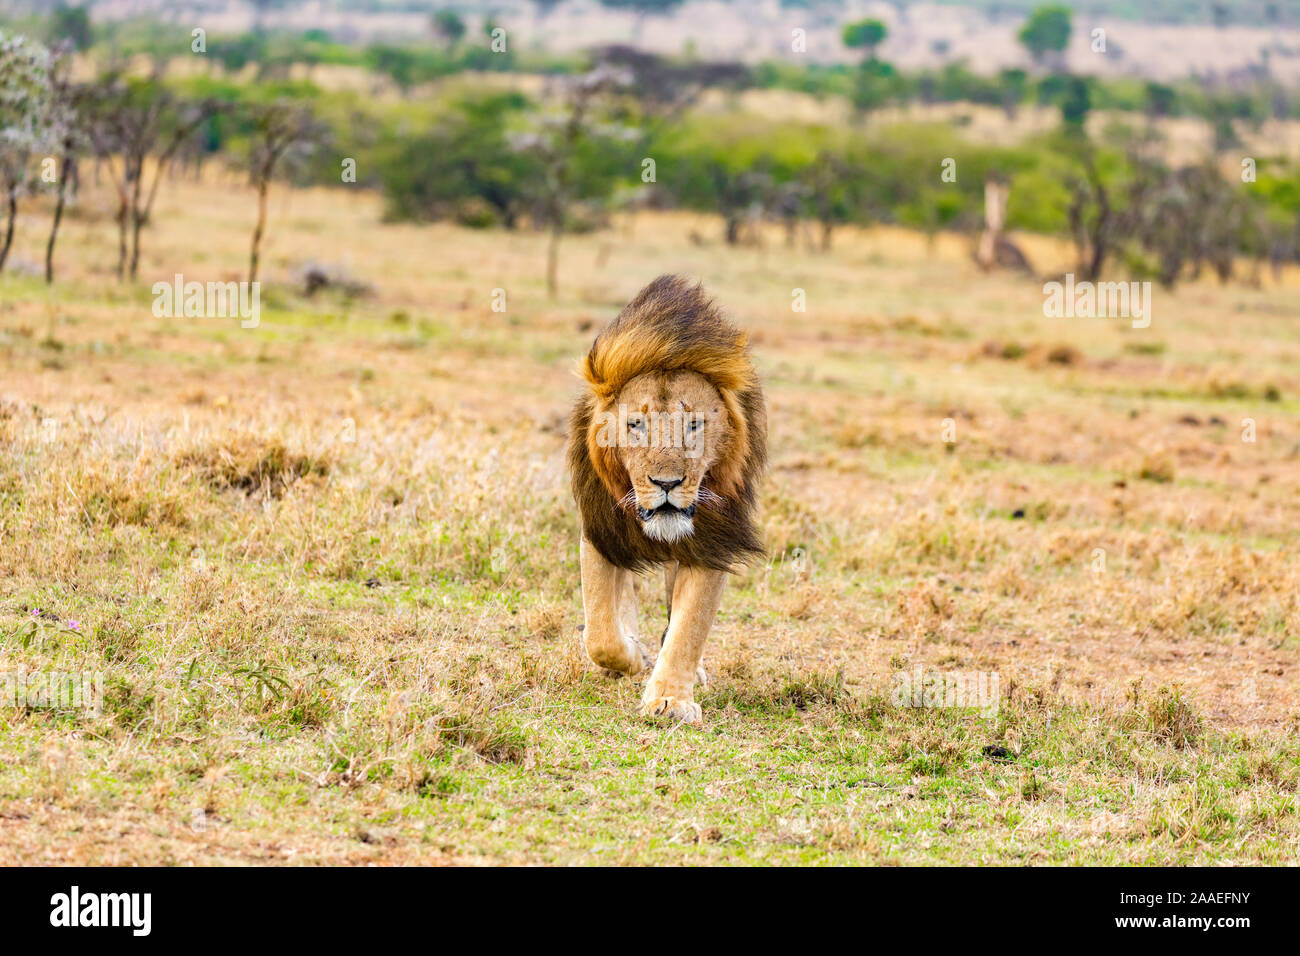 lion in african savanna Stock Photo